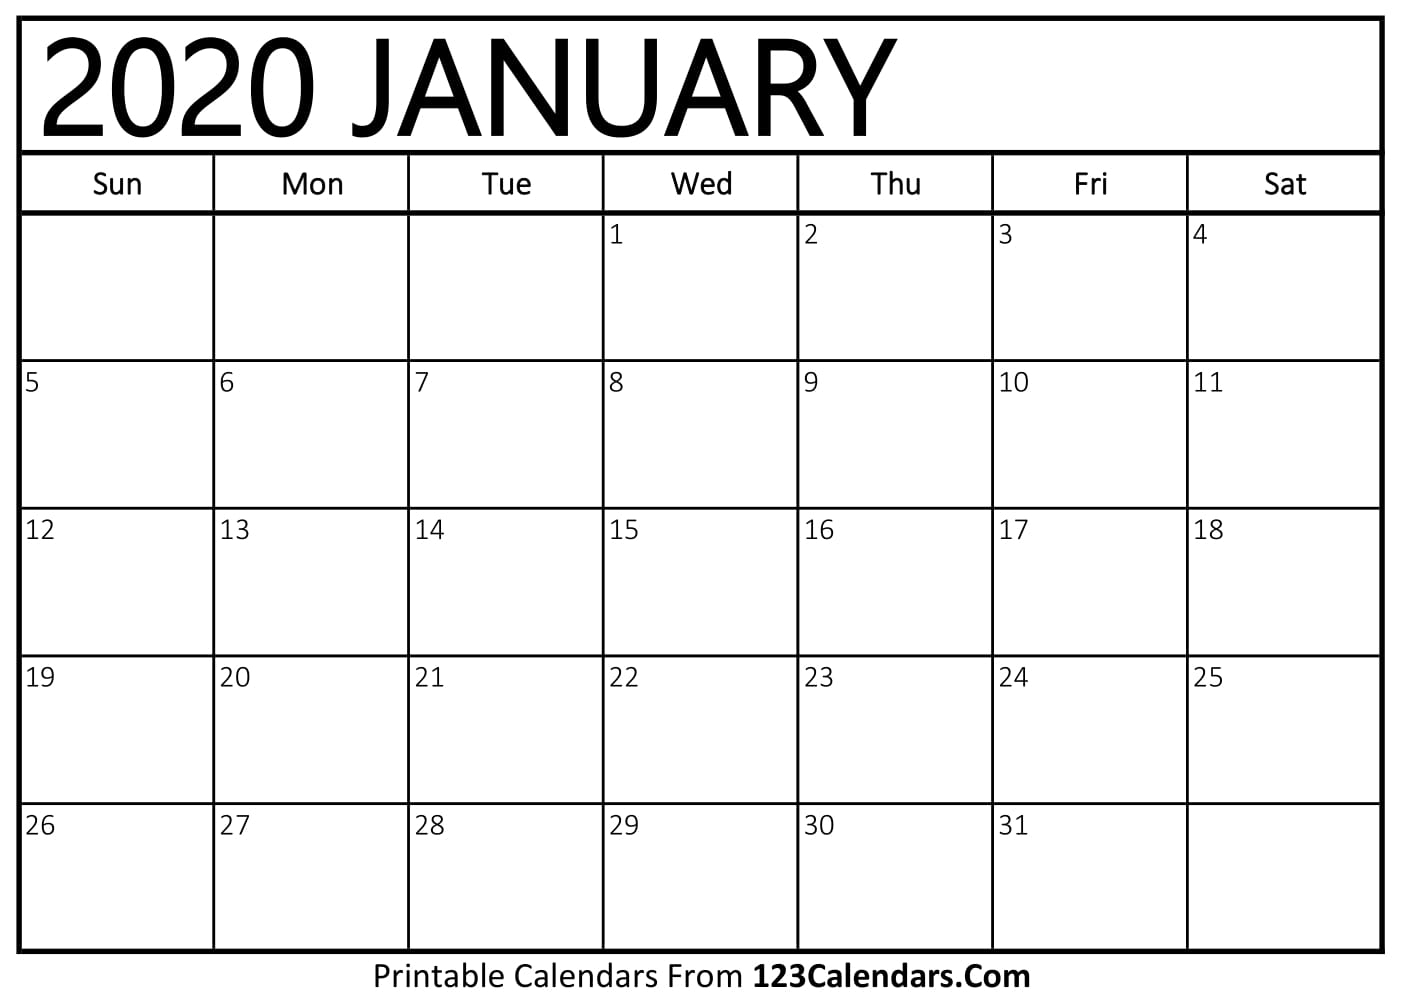 Free Printable Calendar | 123Calendars inside Calendars To Print Free With Space To Write